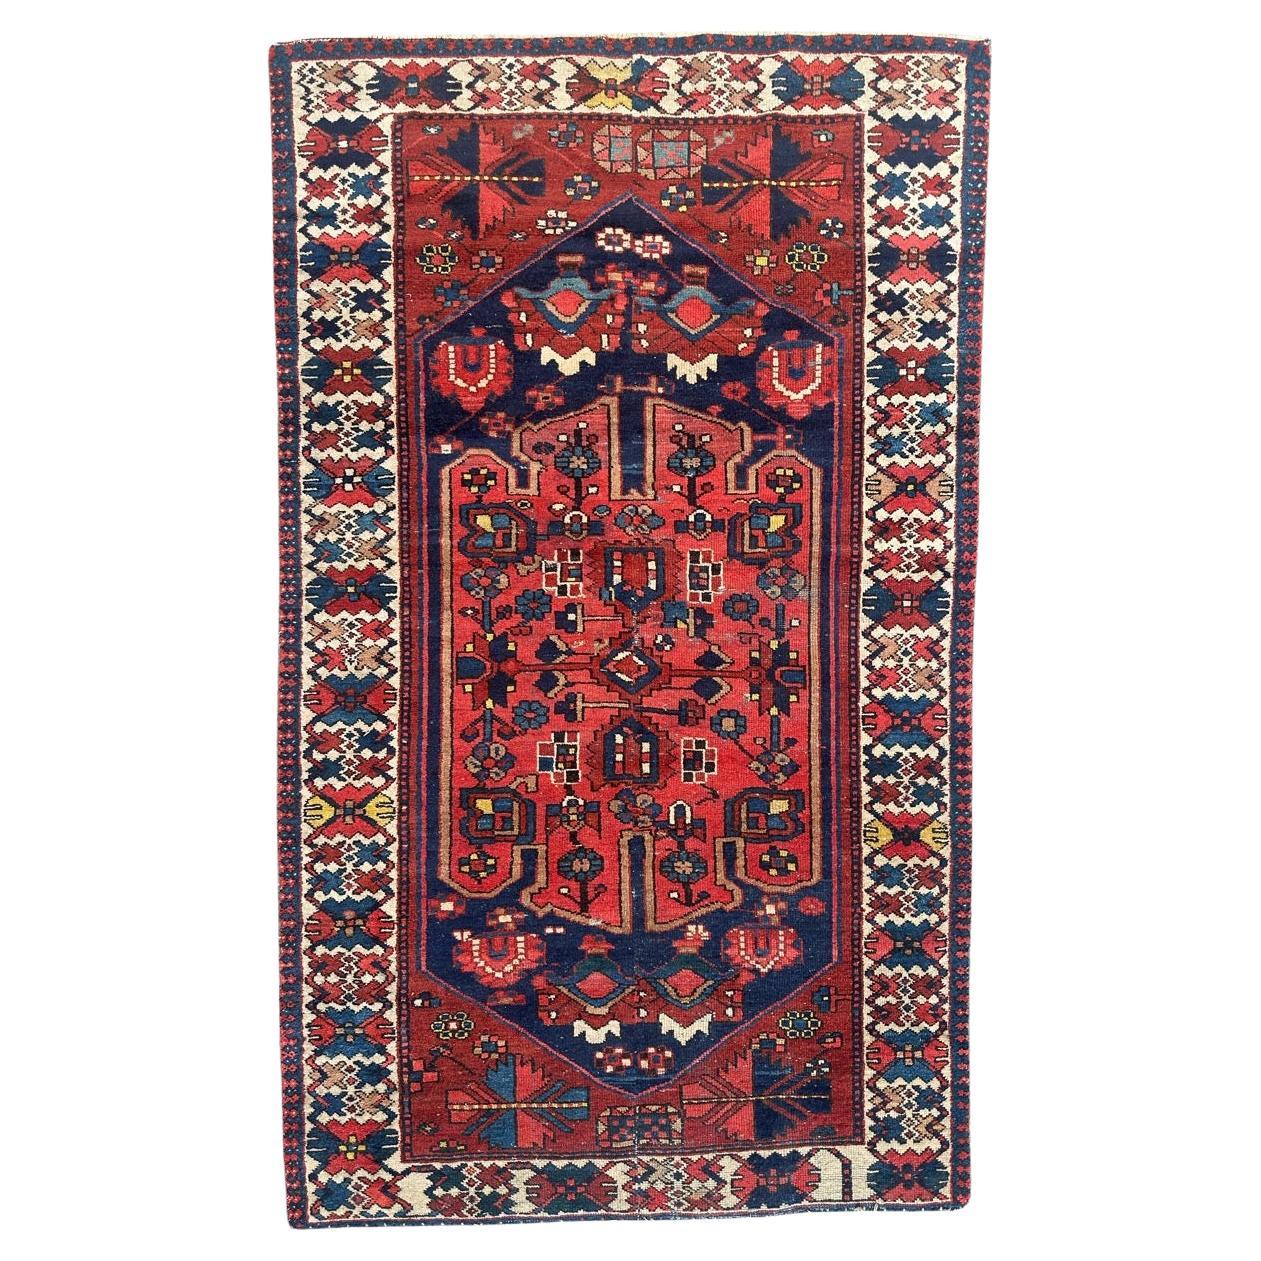 Bobyrug’s pretty antique tribal Hamadan rug 